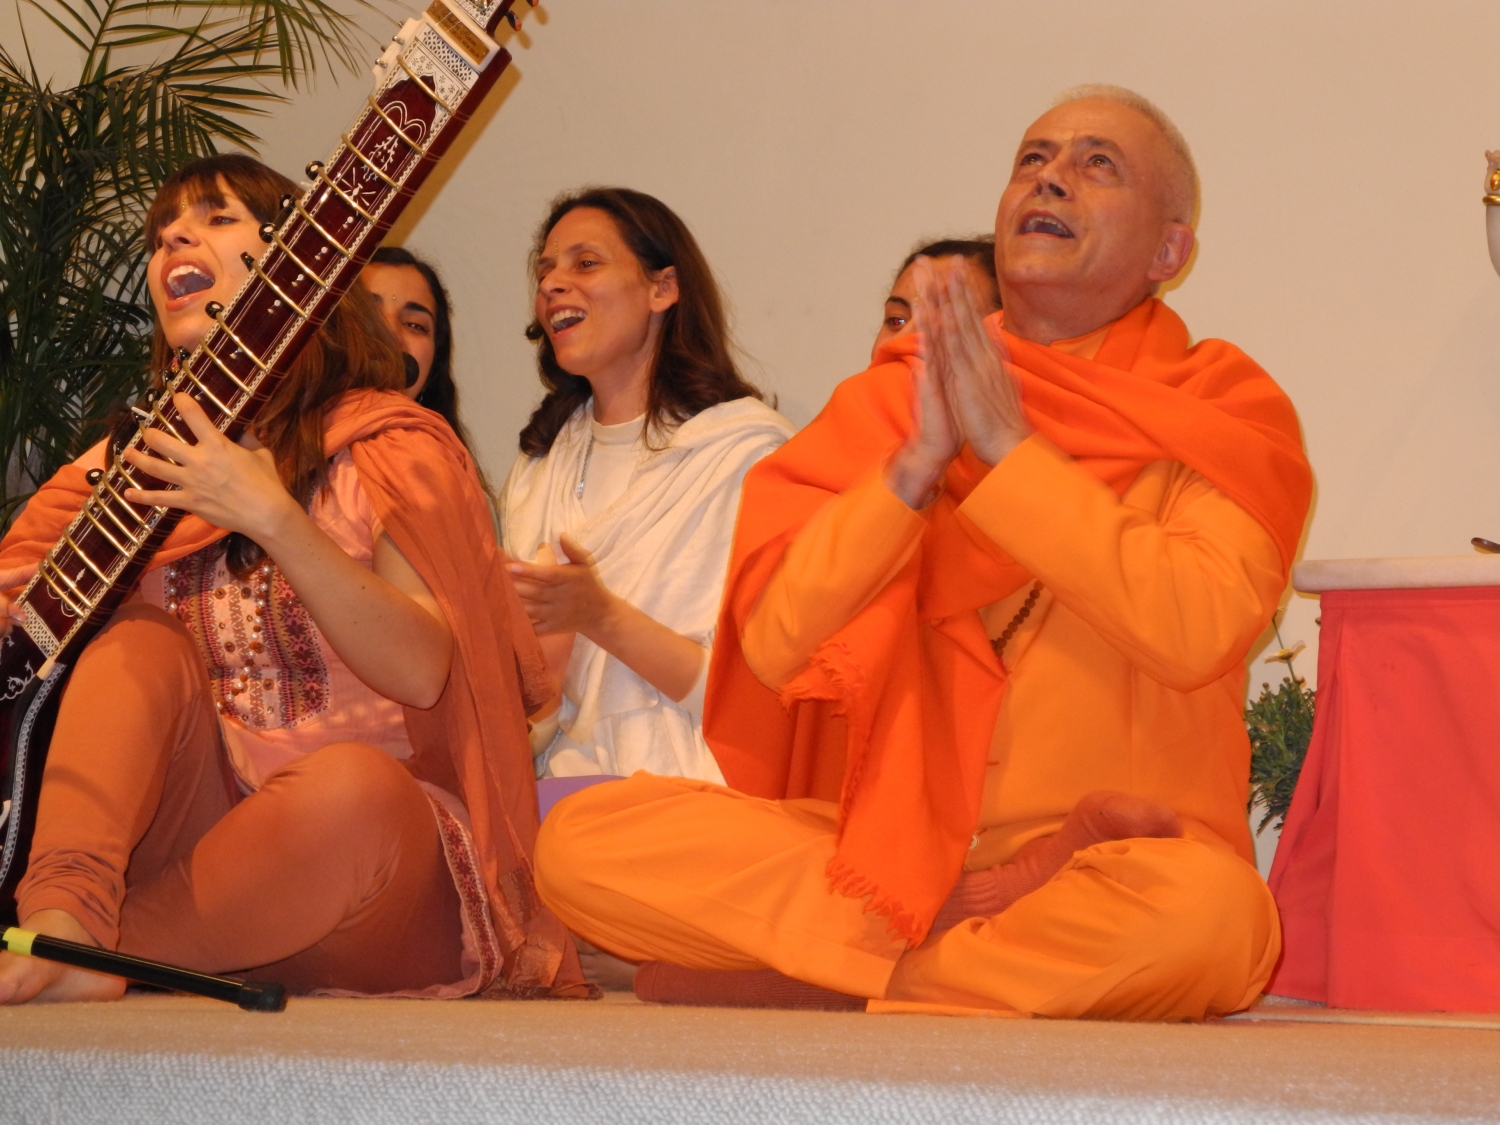 Meeting de H.H. Jagat Guru Amrta Sūryānanda Mahā Rāja with Master Sukadev Bretz - Yoga Vidya, Bad Meinberg, Germany - 2012, March